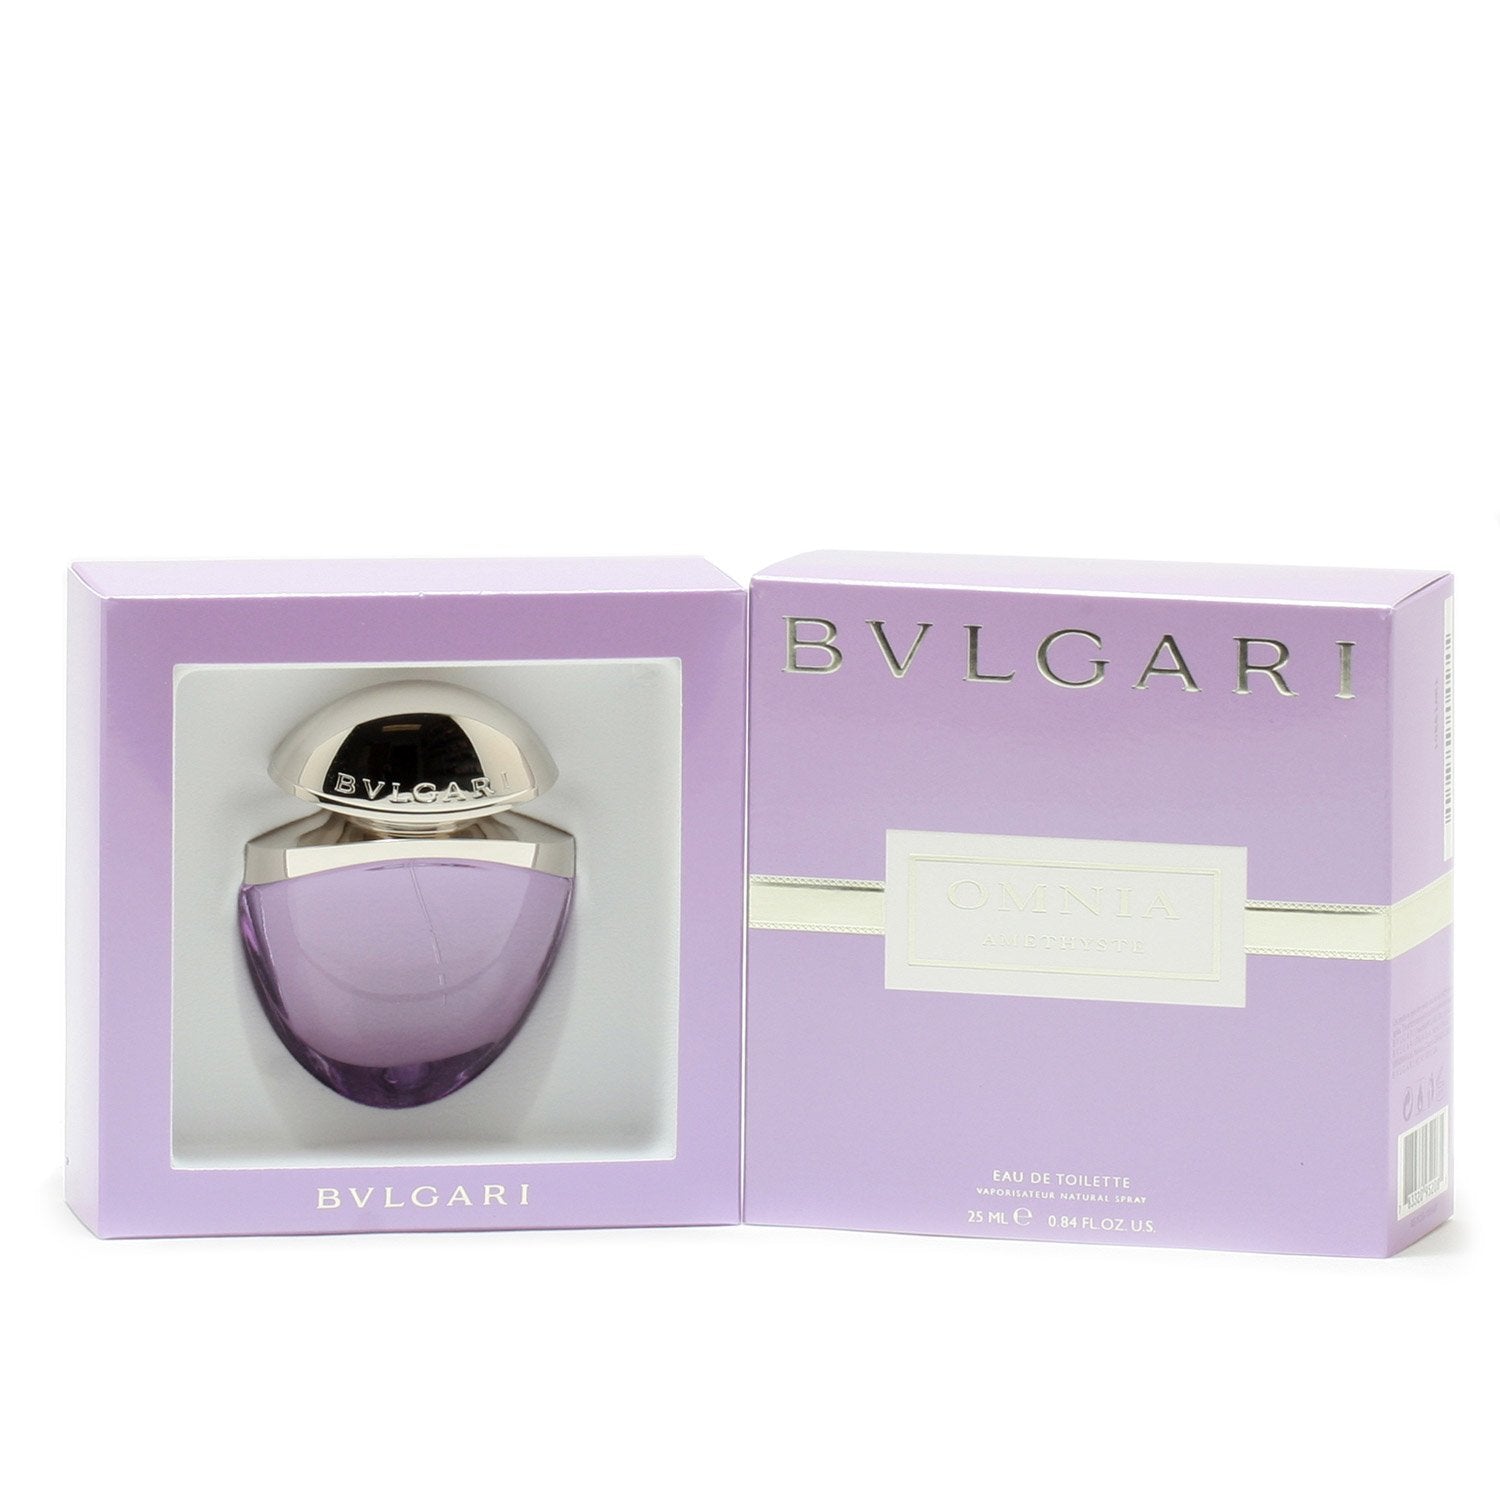 Perfume - BVLGARI OMNIA AMETHYSTE JEWEL CHARM FOR WOMEN - EAU DE TOILETTE SPRAY, 0.84 OZ